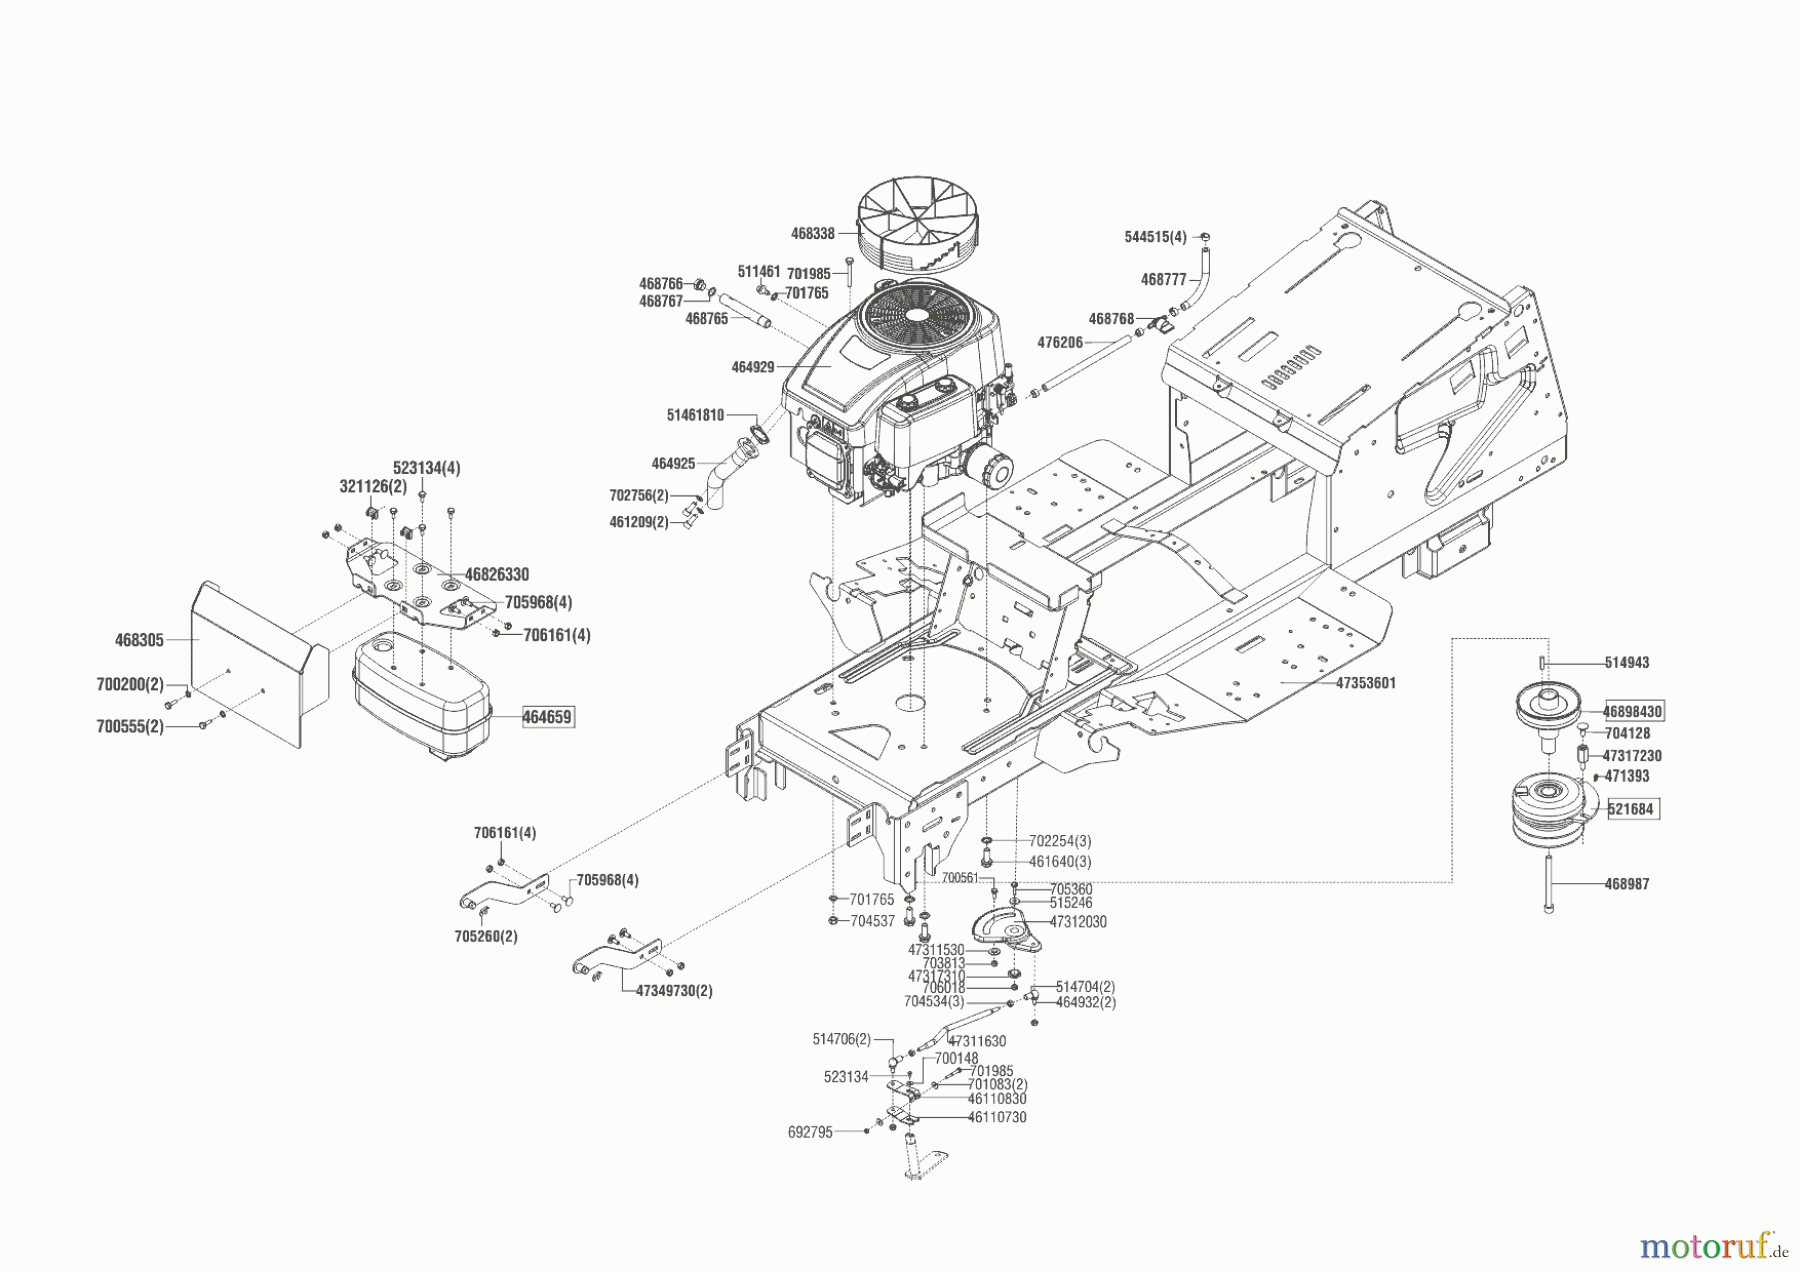  Powerline Gartentechnik Rasentraktor T 15-95.4 HD-A  ab 03/2016 Seite 2